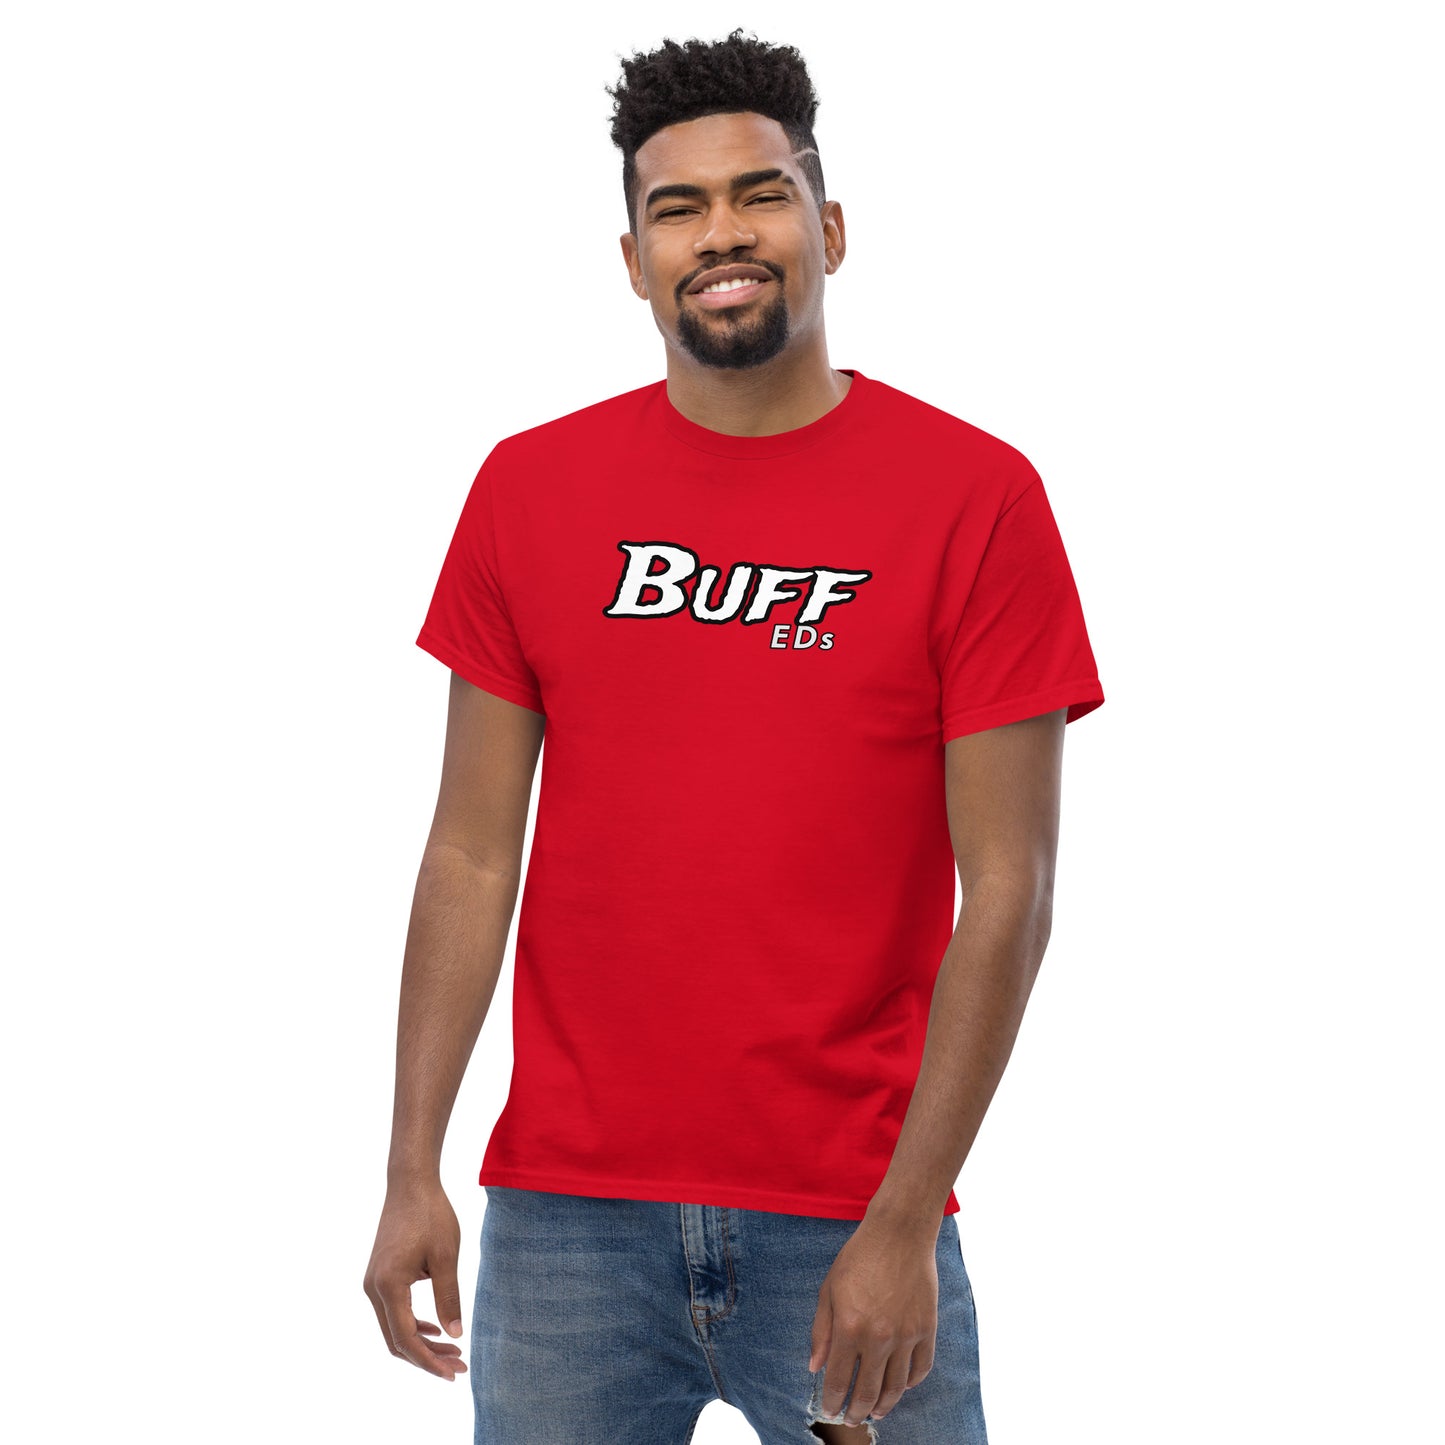 Buff EDs Men's Classic T-Shirt